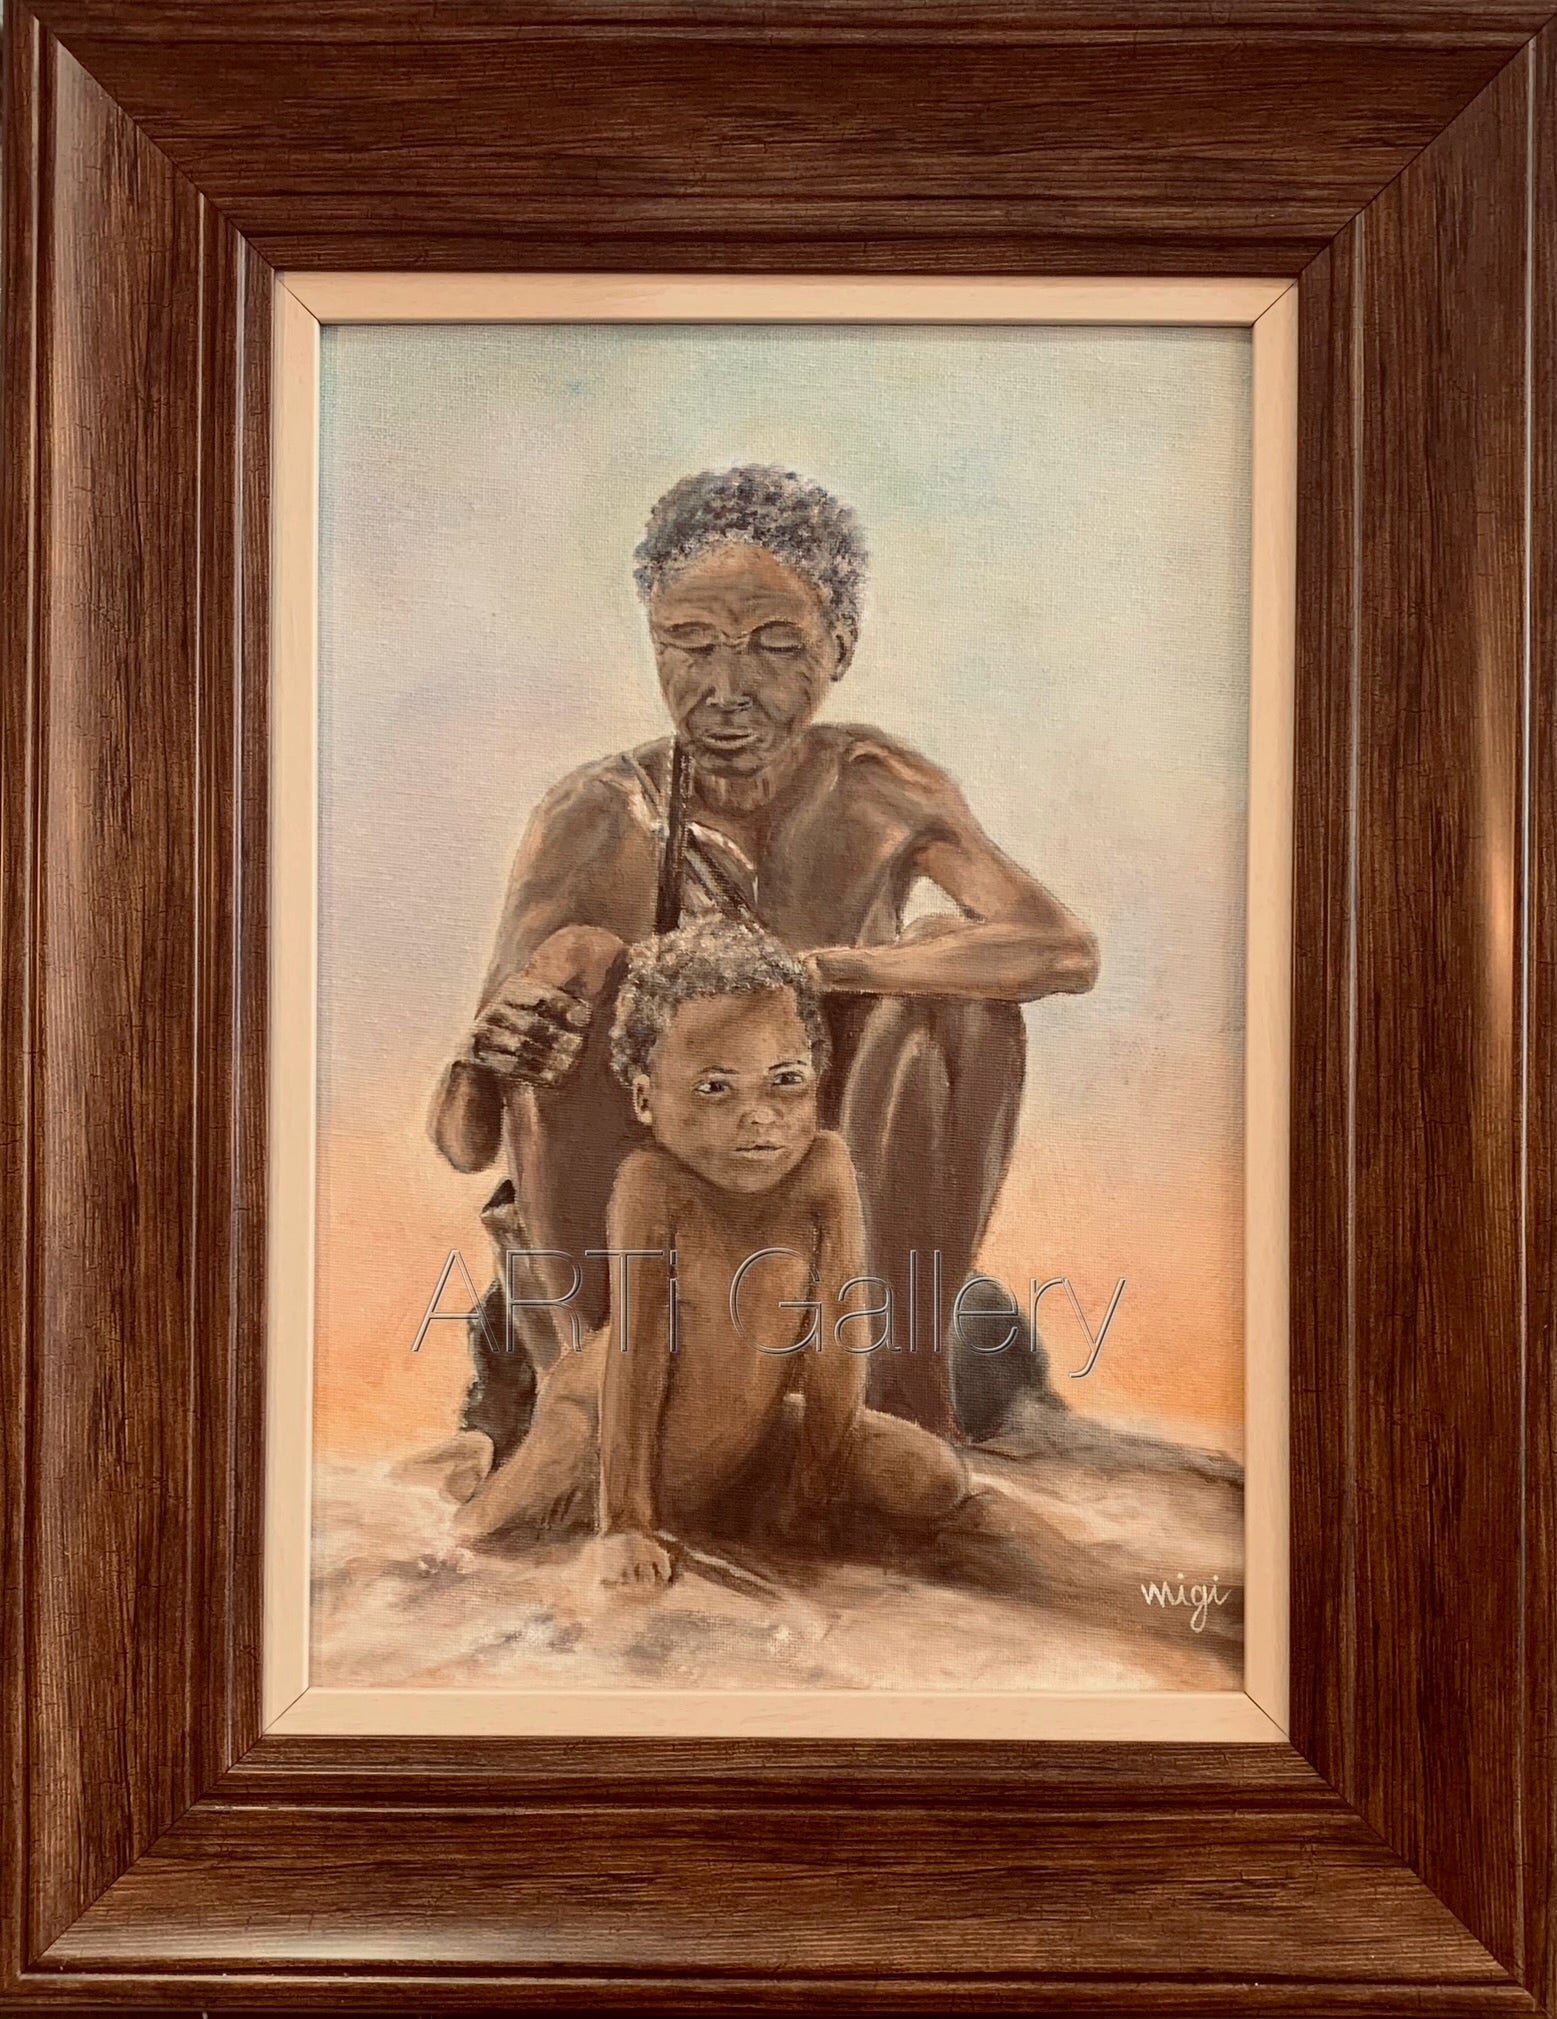 Original South African Art: Migi - A Mother's Love